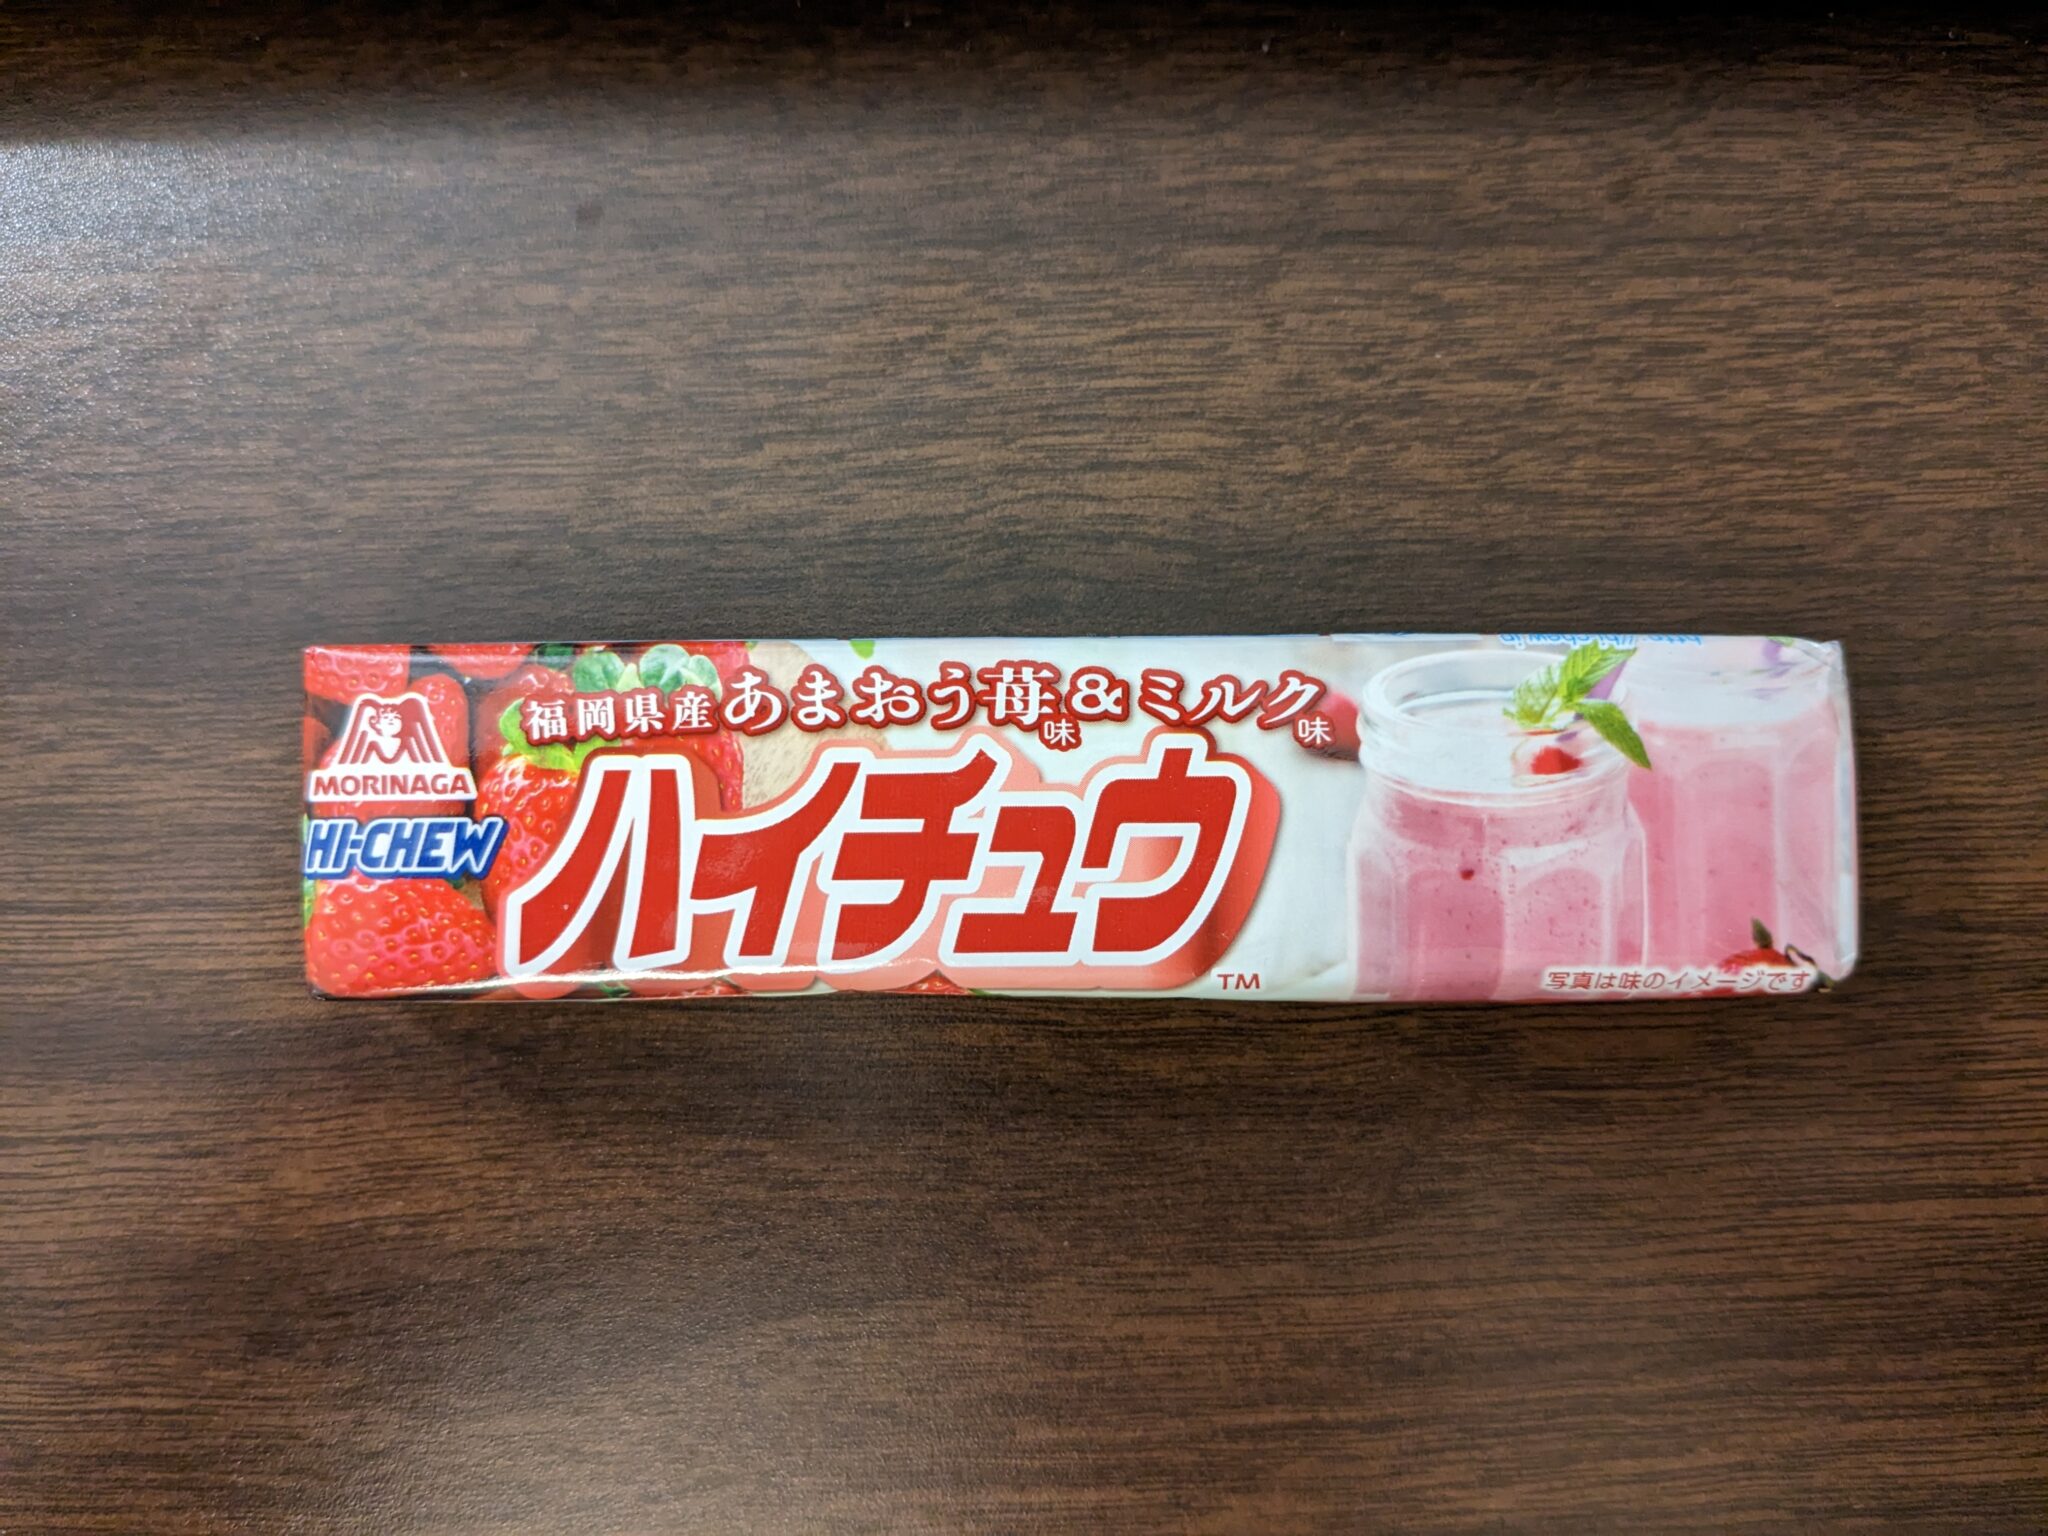 Hi-Chew – Strawberry Milk Smoothie